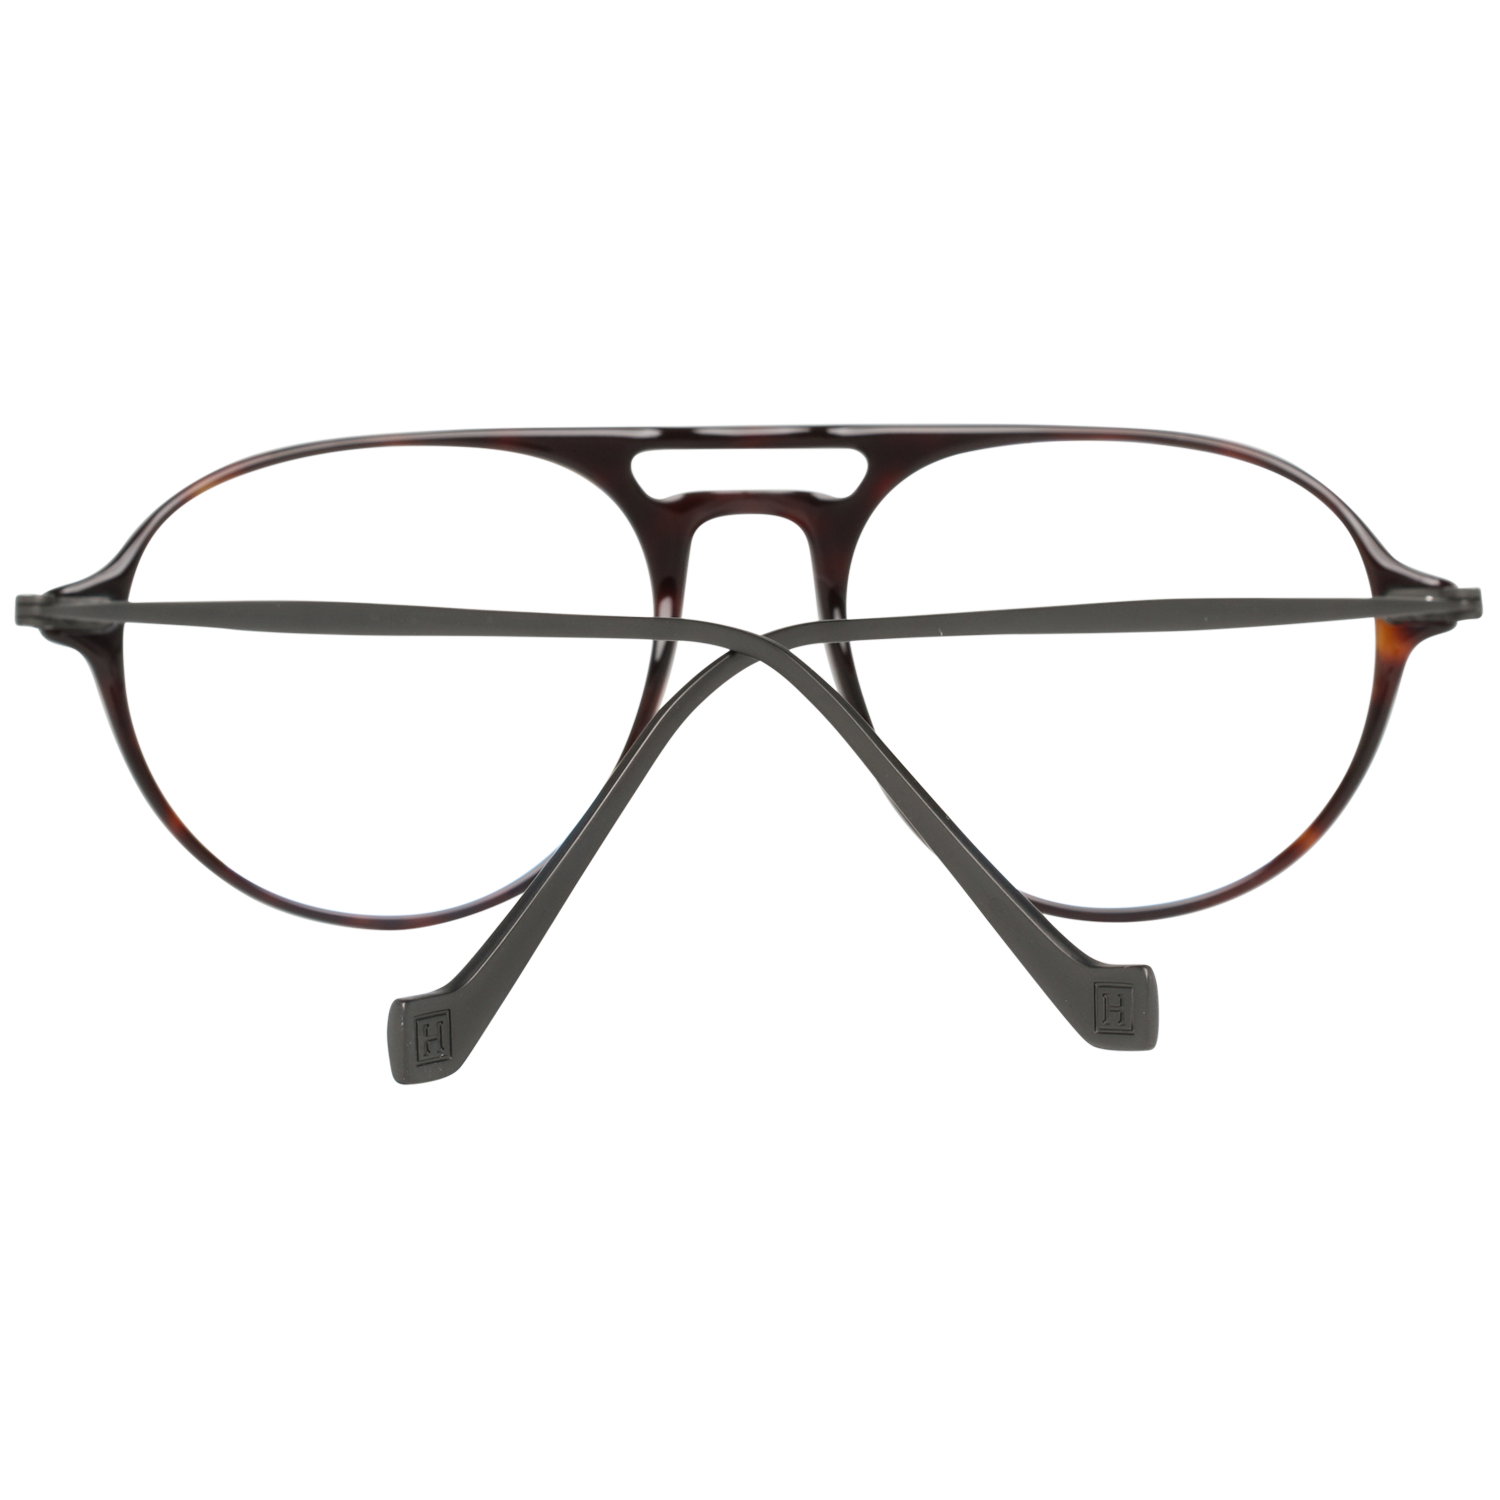 Hackett Frames Hackett Bespoke Glasses Optical Frame HEB239 143 51 Eyeglasses Eyewear UK USA Australia 